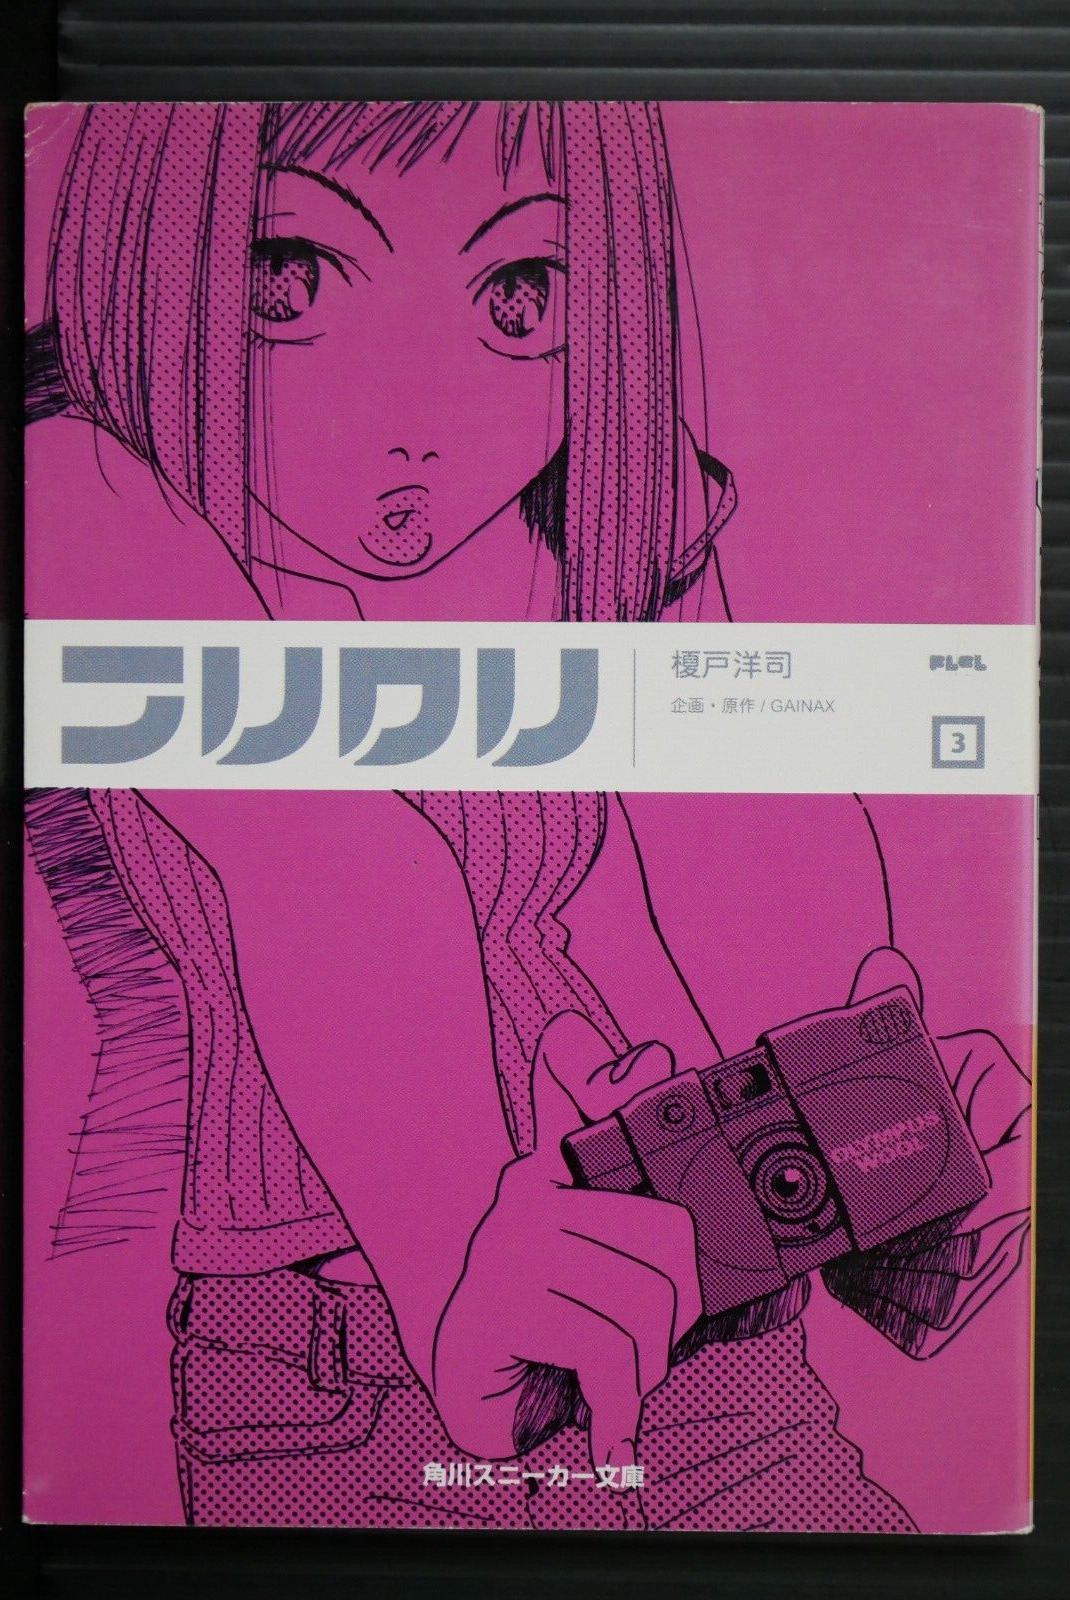 FLCL Furi Kuri Vol.3 Novel by Gainax / Yoji Enokido (Damage) - JAPAN